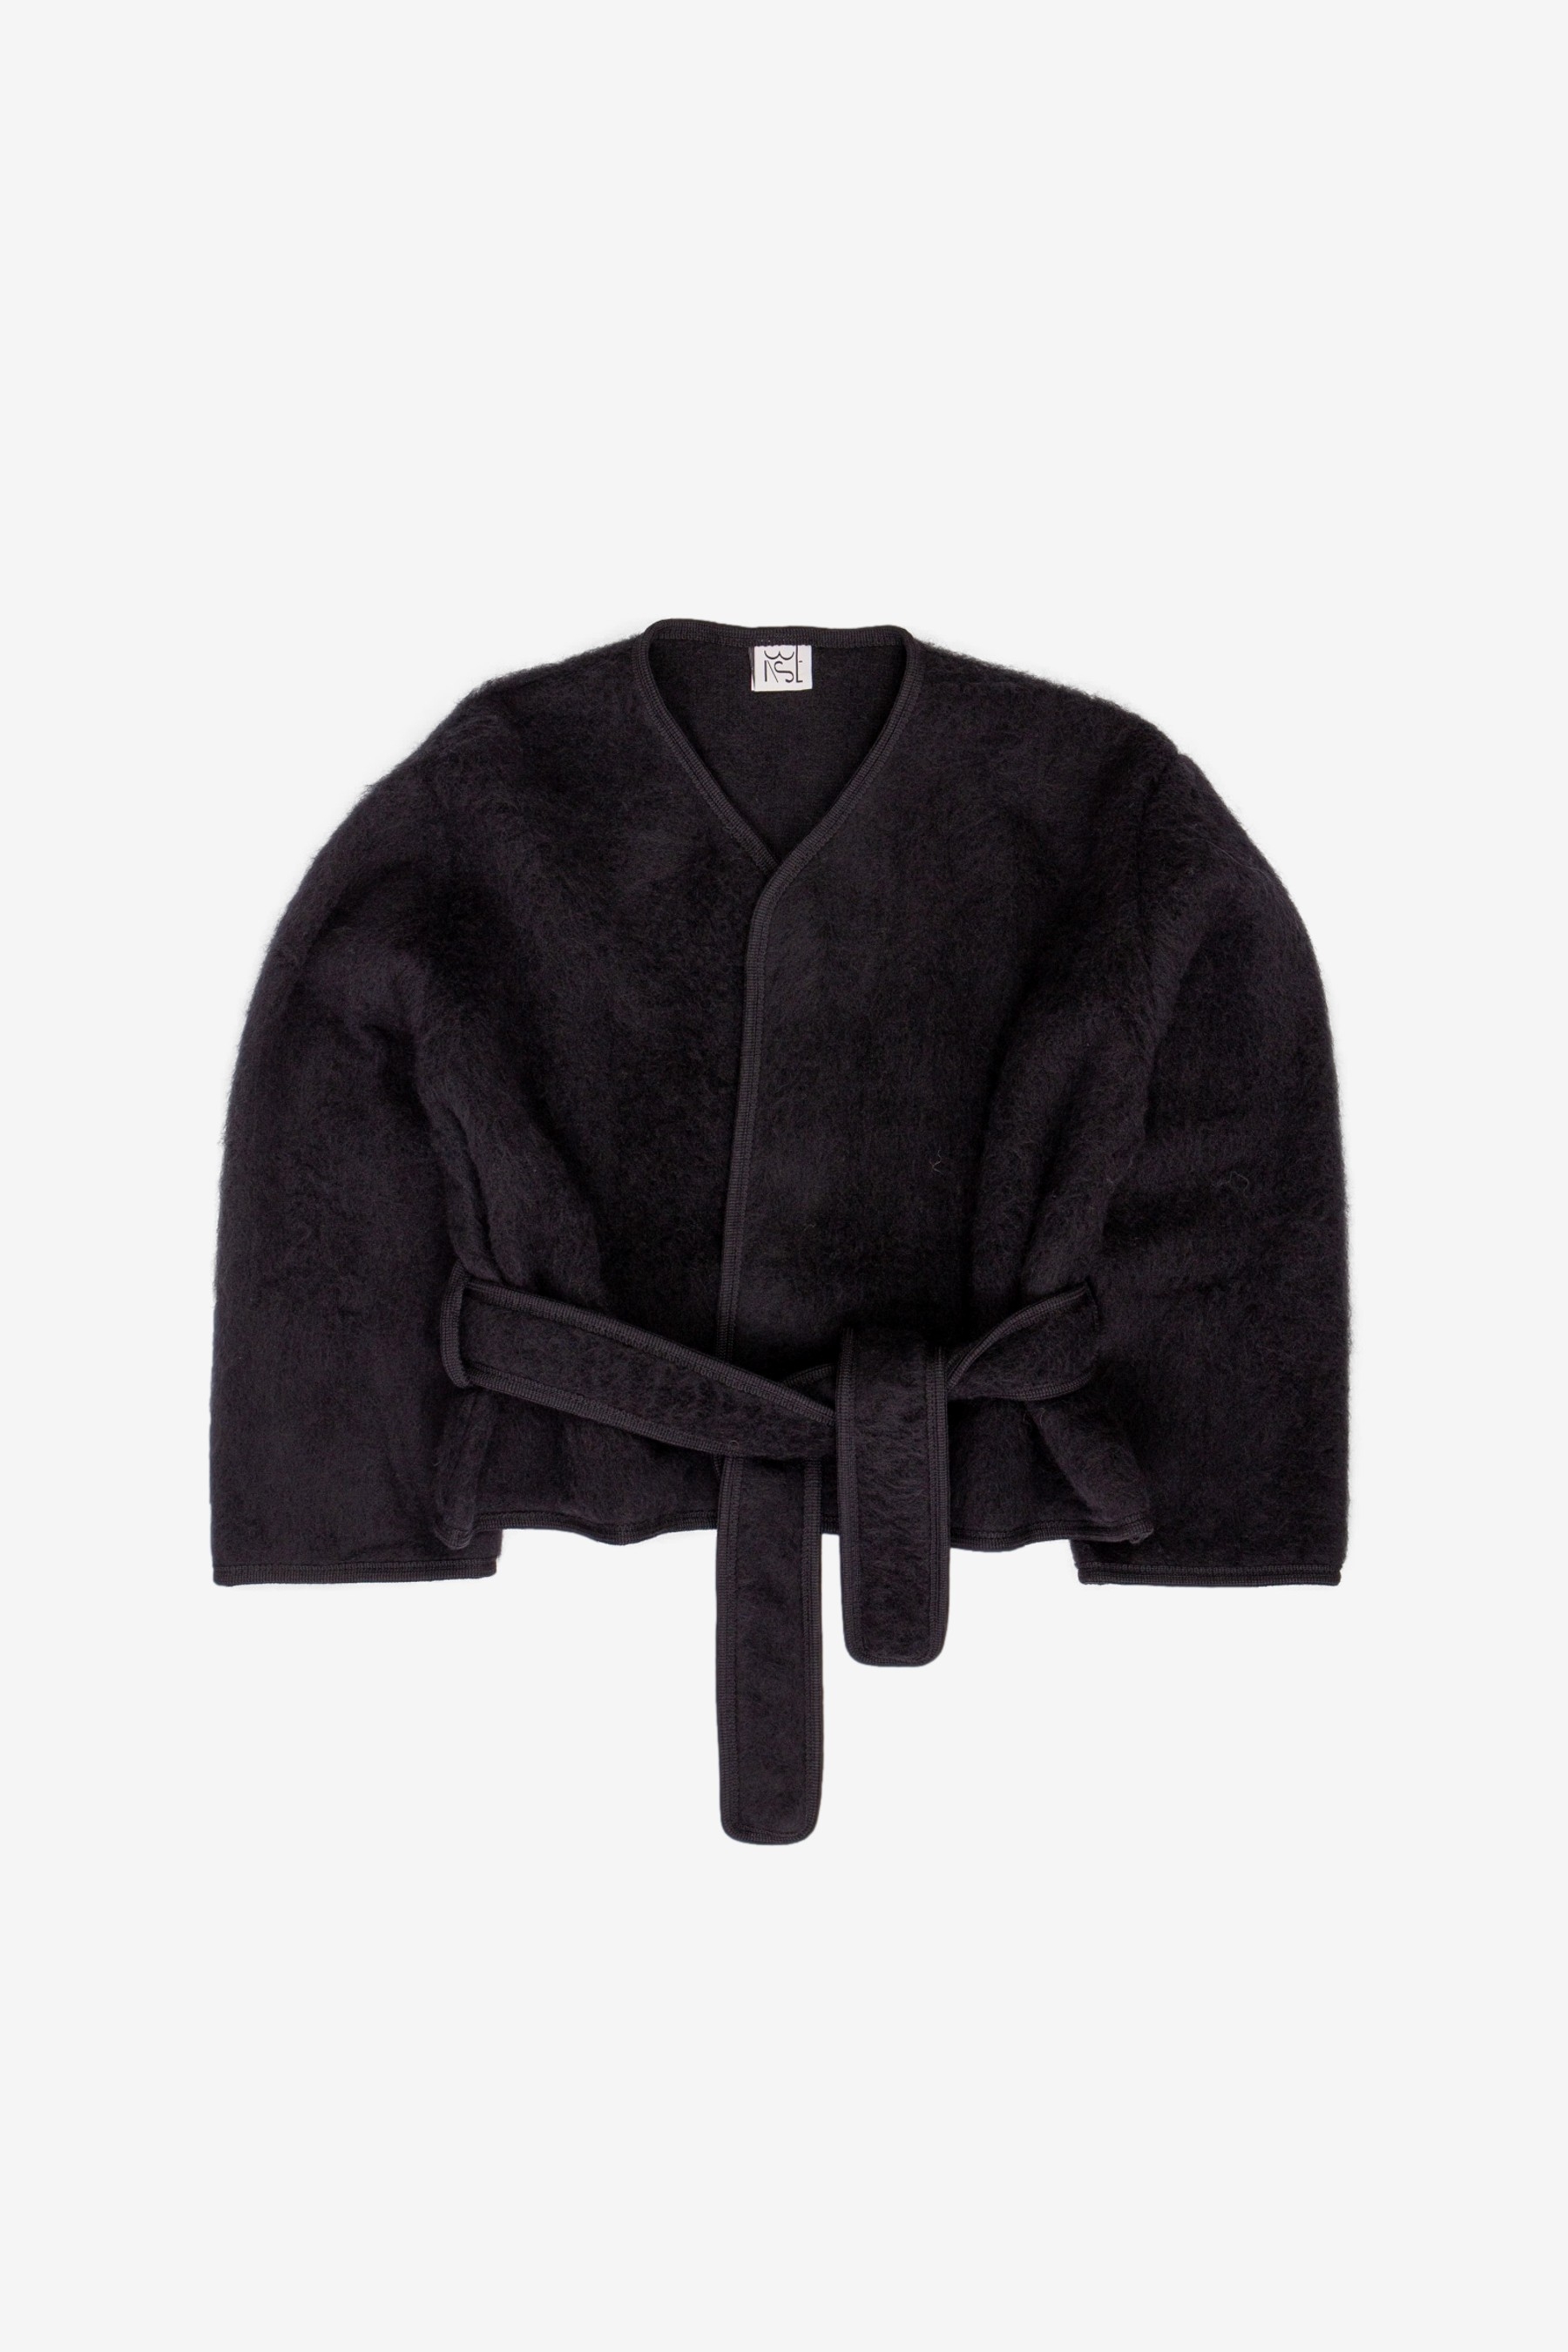 Capas Jacket in Black - Baserange | Afura Store